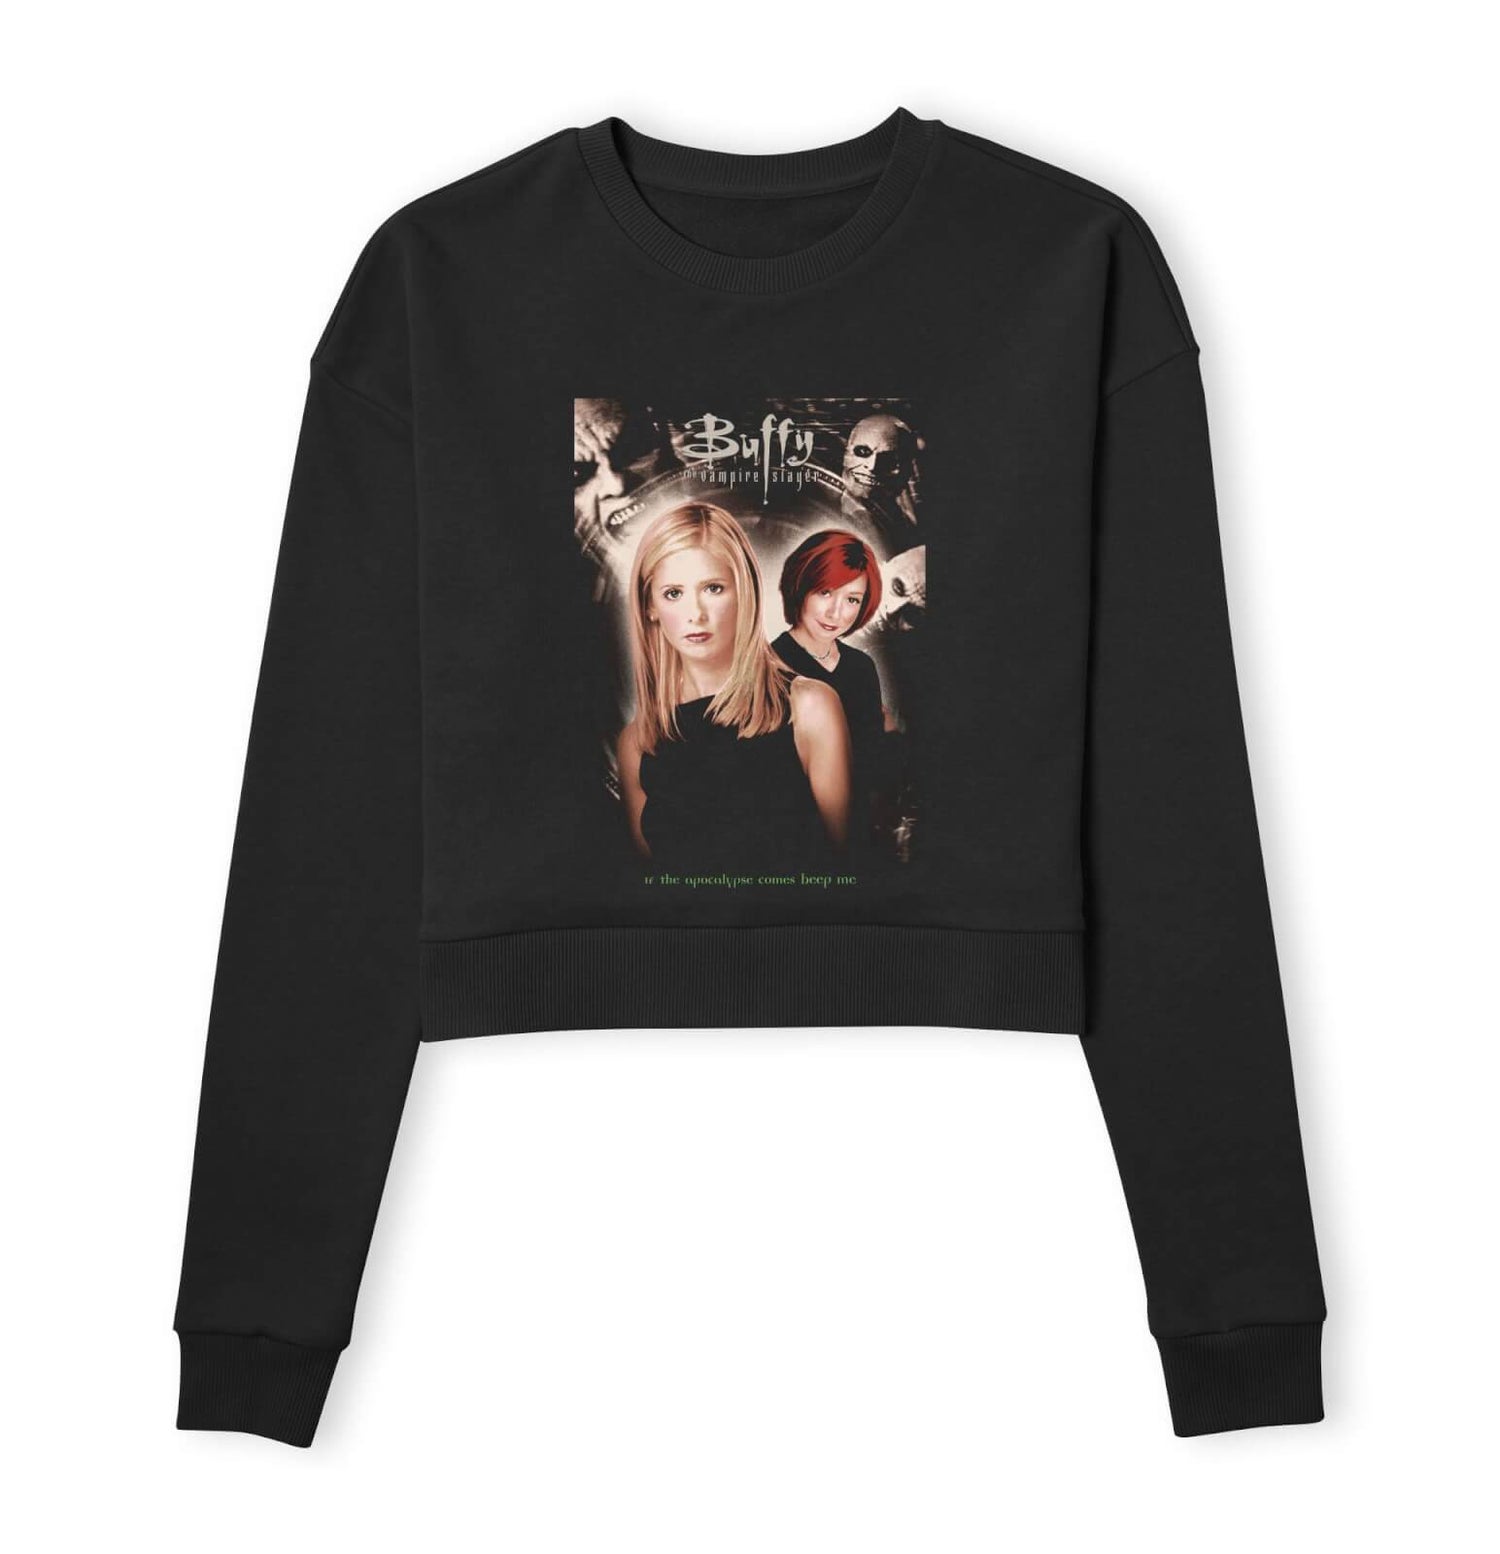 Buffy The Vampire Slayer S4 Poster Women's Cropped Sweatshirt - Black